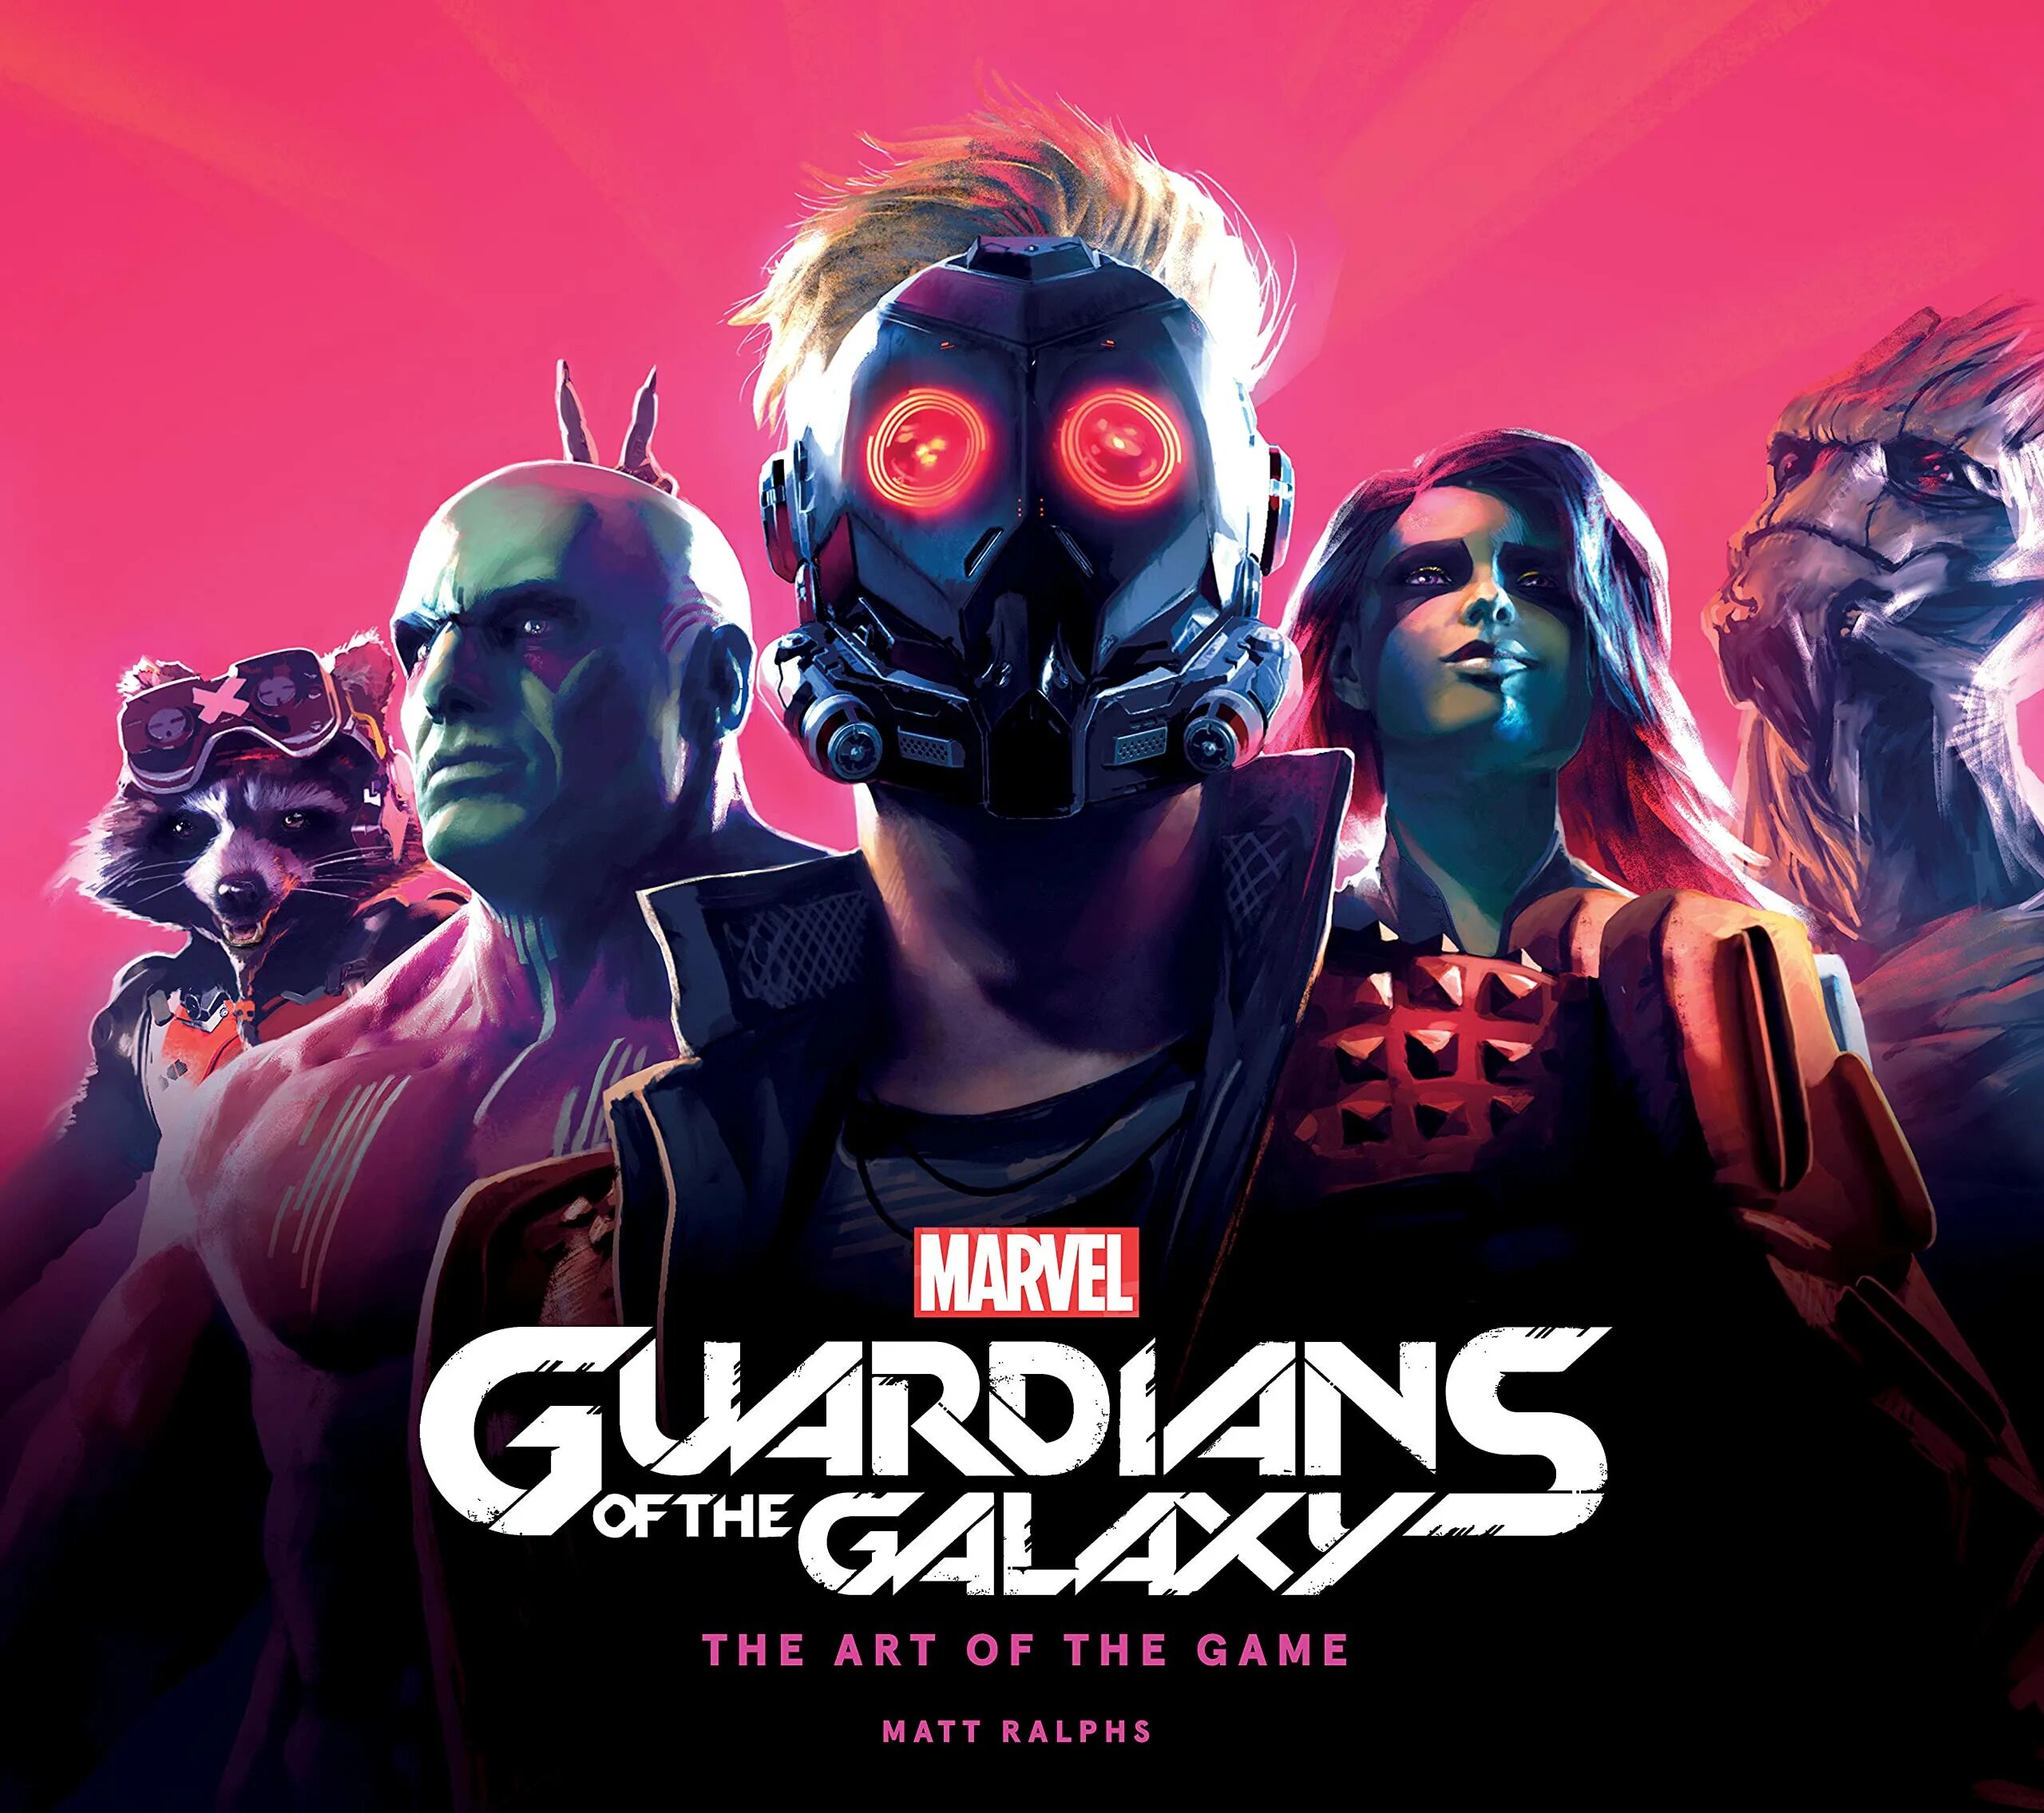 Guardians of the Galaxy (игра). Марвел Стражи Галактики. Marvel's Guardians of the Galaxy игра 2021. Стражи Галактики Marvel игра.